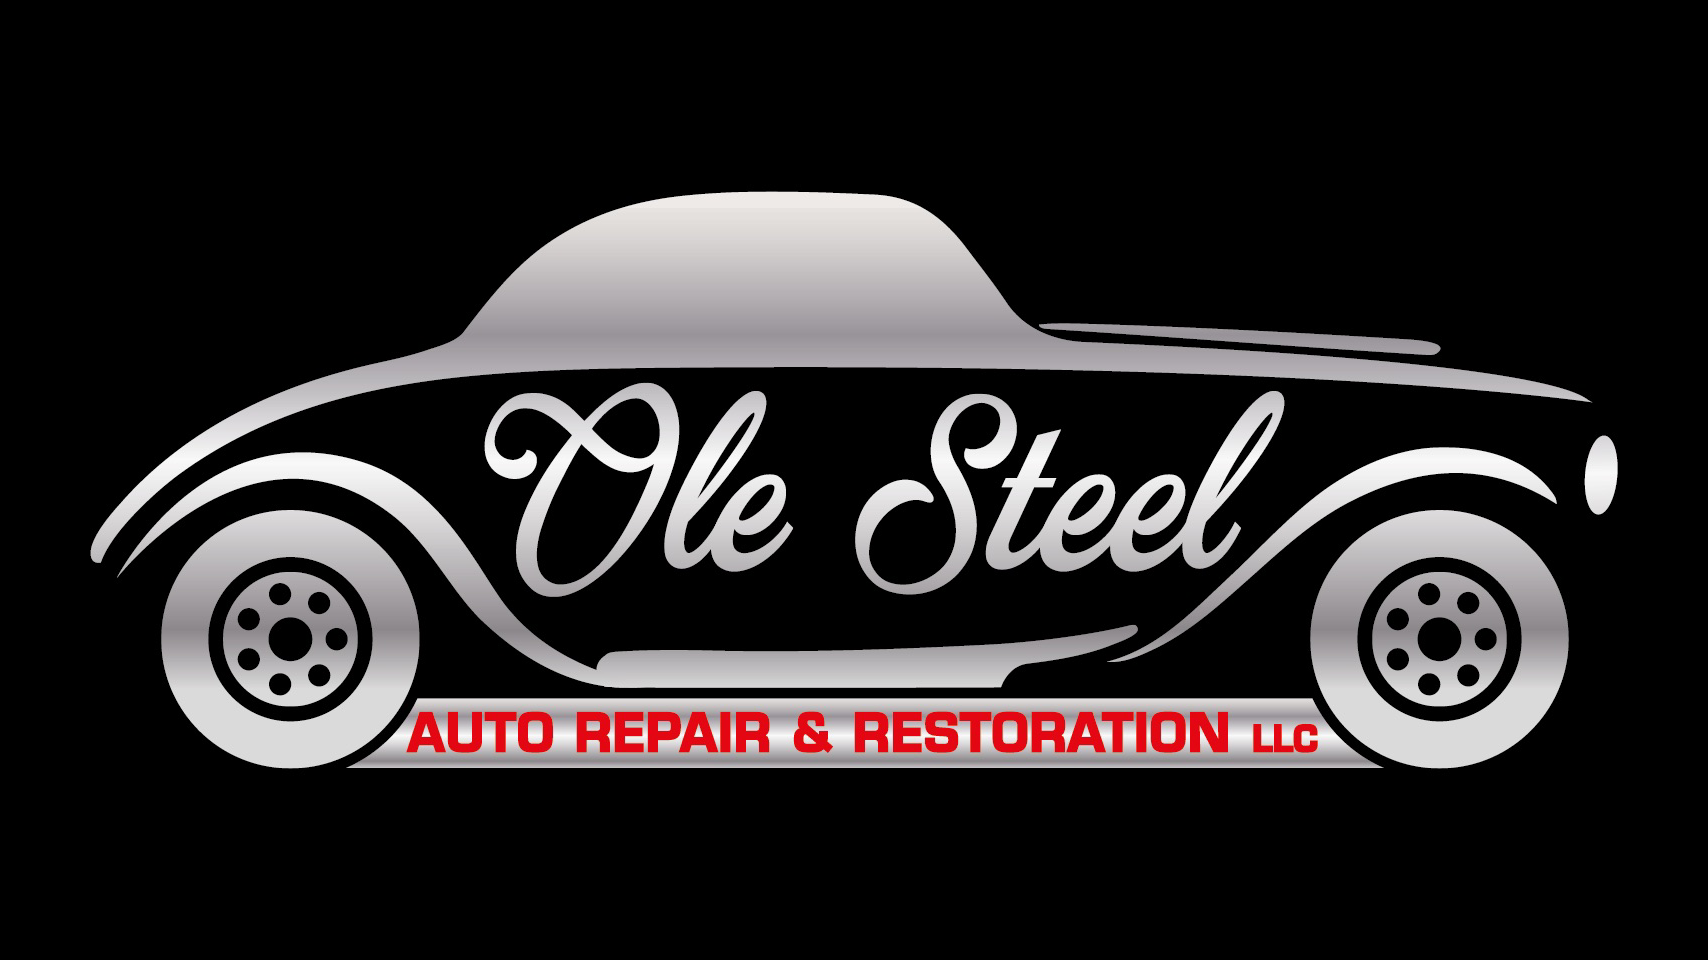 Ole Steel Auto Repair & Restoration llc